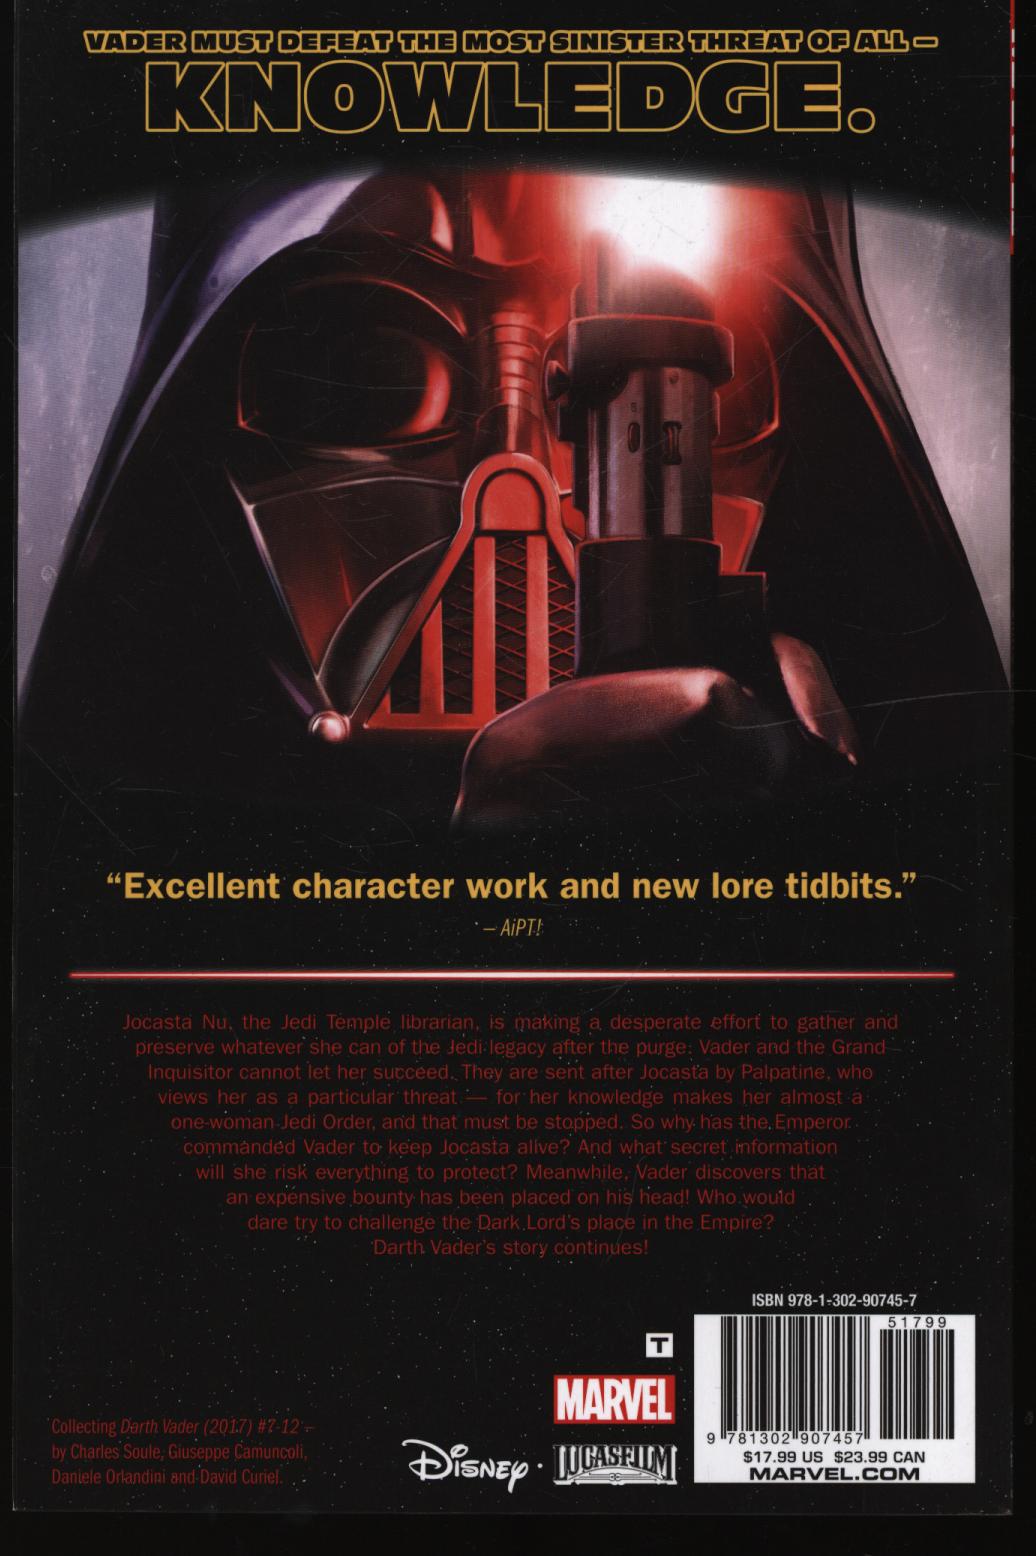 Star Wars: Darth Vader - Dark Lord Of The Sith Vol. 2 - Lega